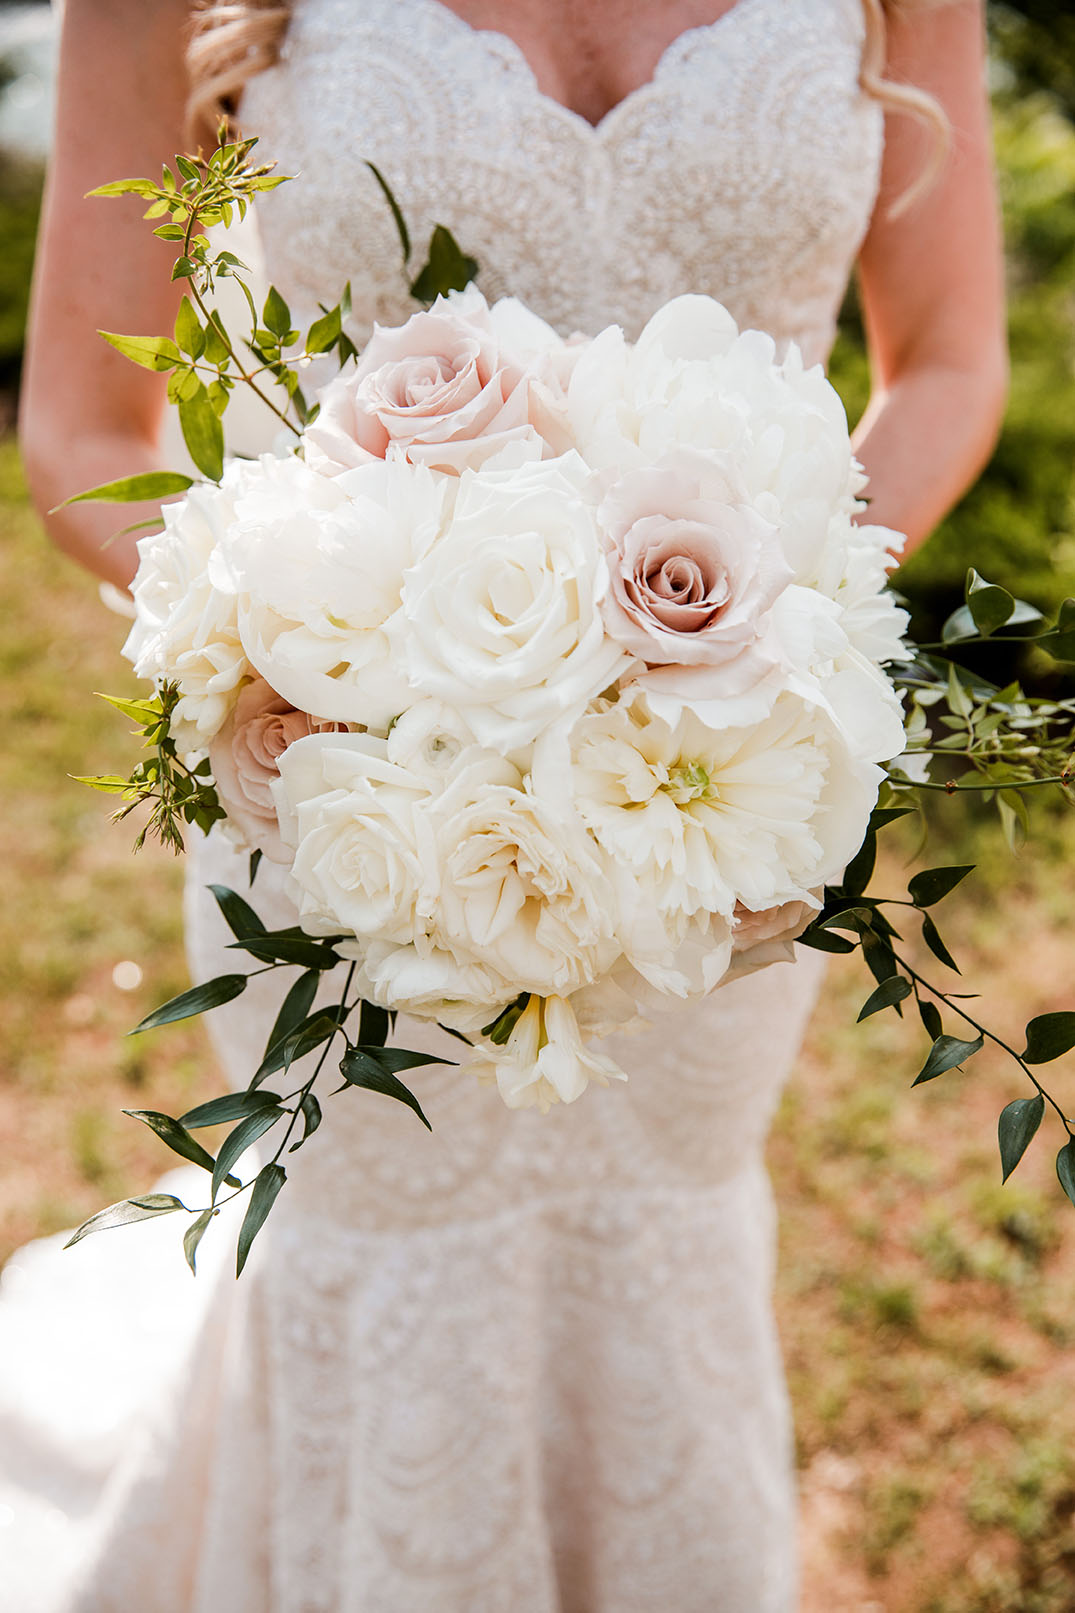 Megan's White & Blush Bouquet